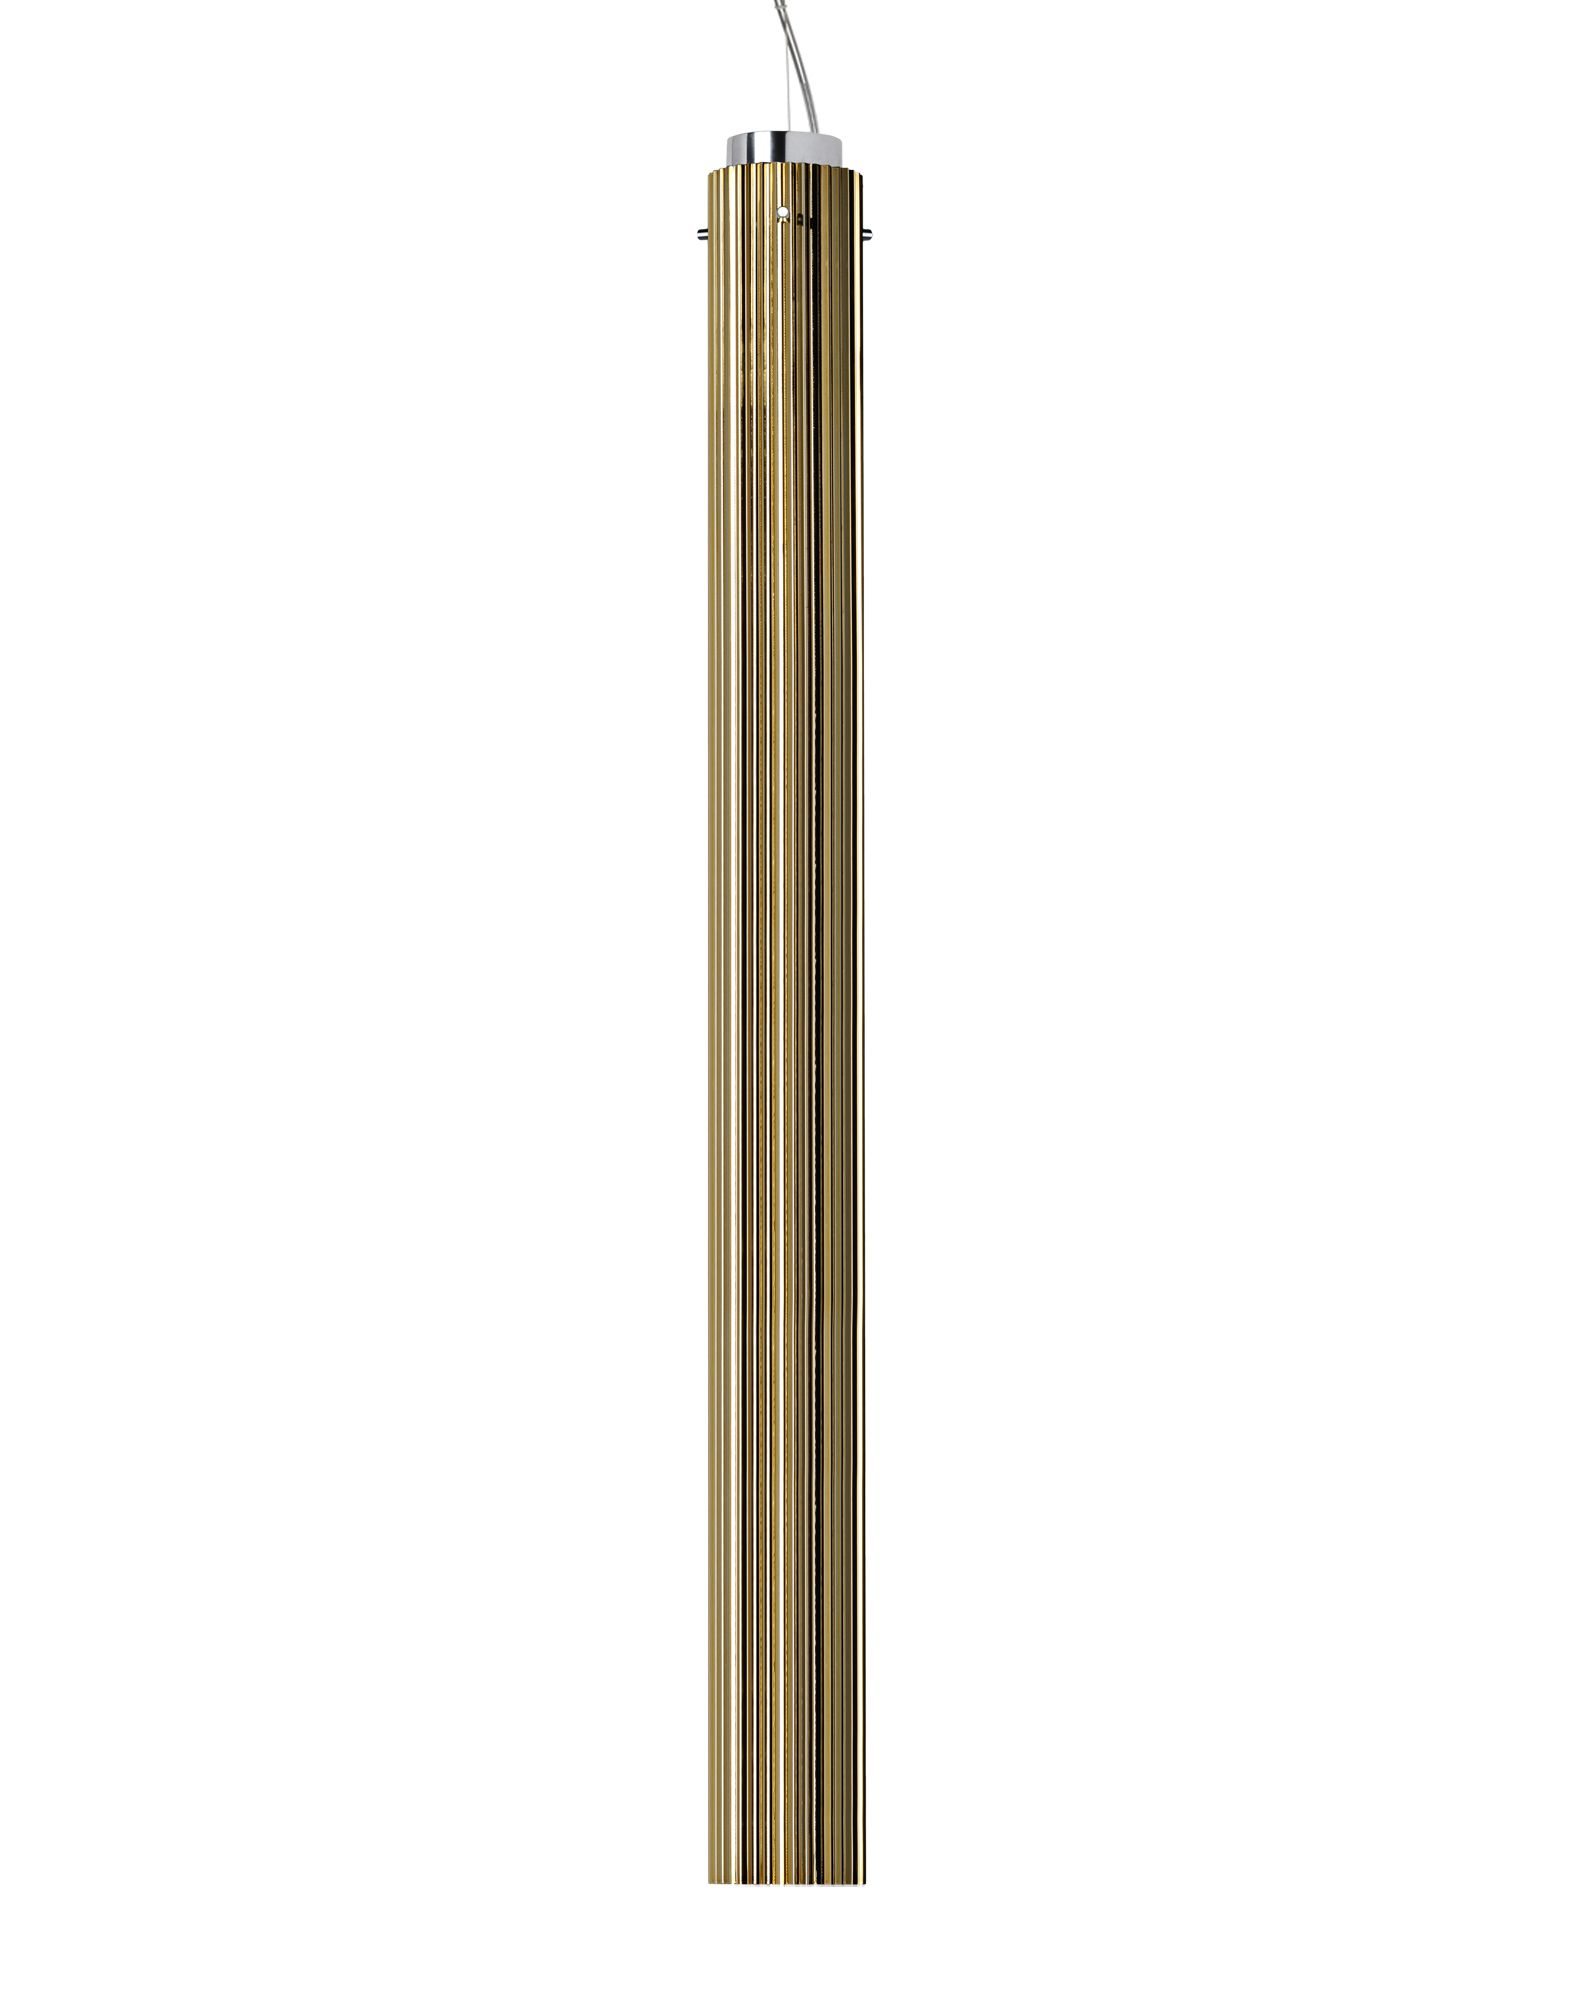 Suspensie Kartell by Laufen Rifly design Ludovica & Roberto Palomba LED 10W h90cm auriu metalizat 10W